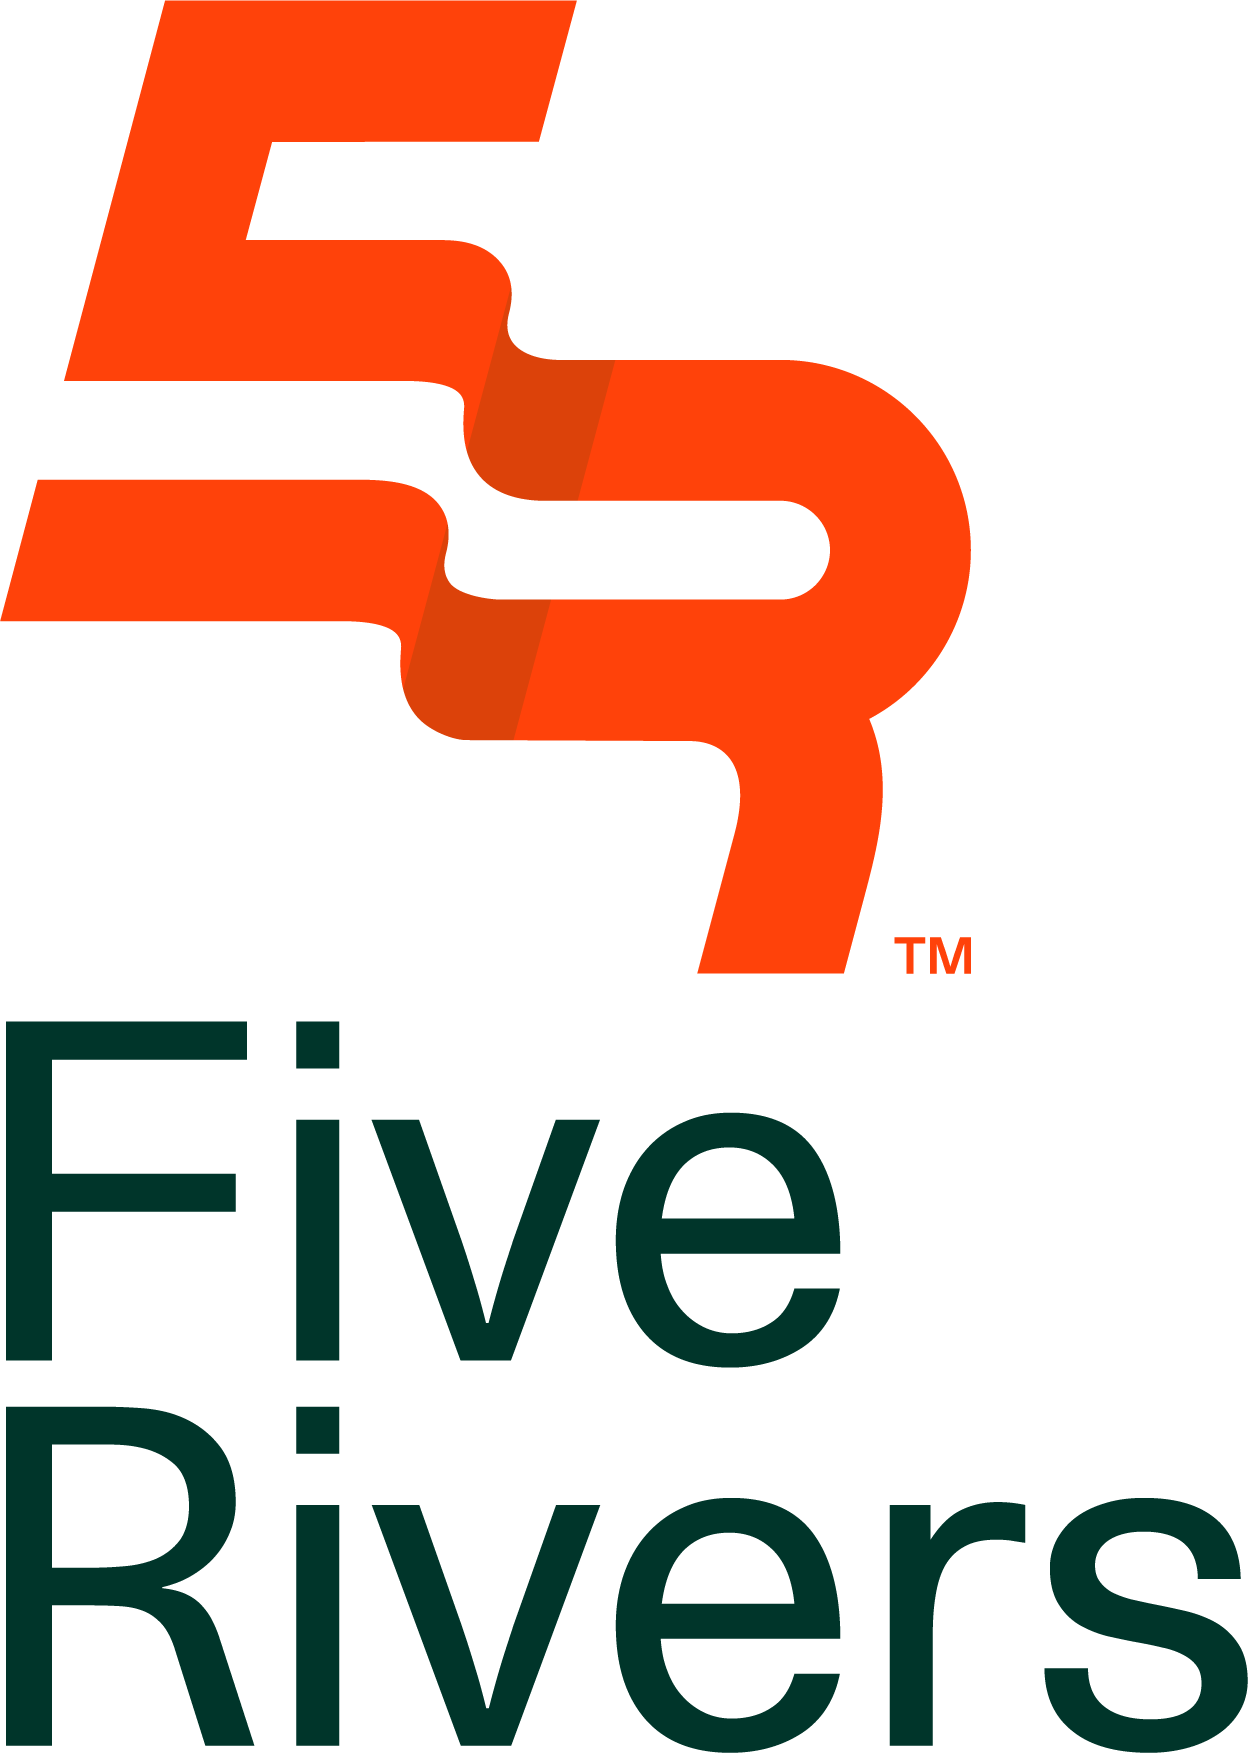 FiveRivers logo